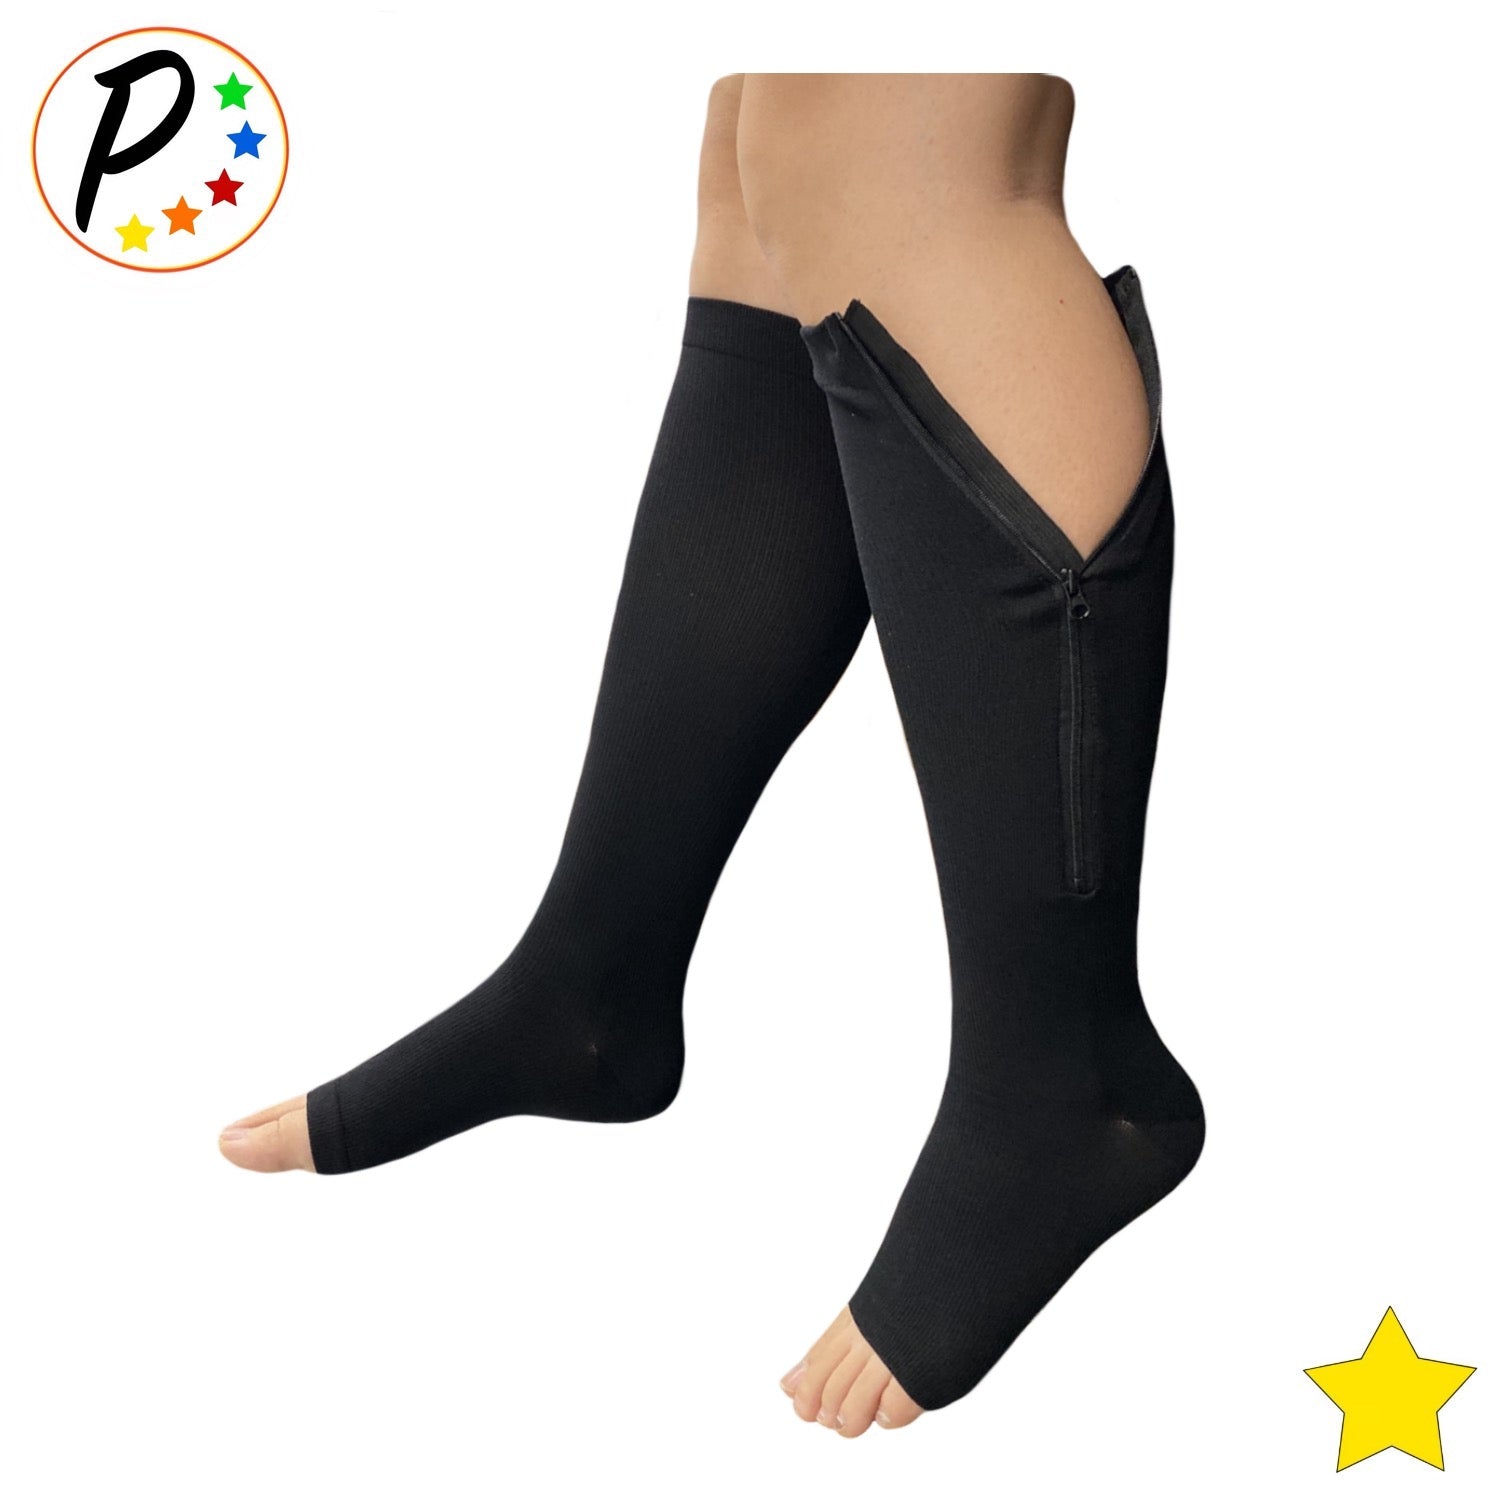  Presadee Closed Toe 15-20 mmHg Zipper Compression Leg  Circulation Calf Socks (Black, S/M) : Health & Household